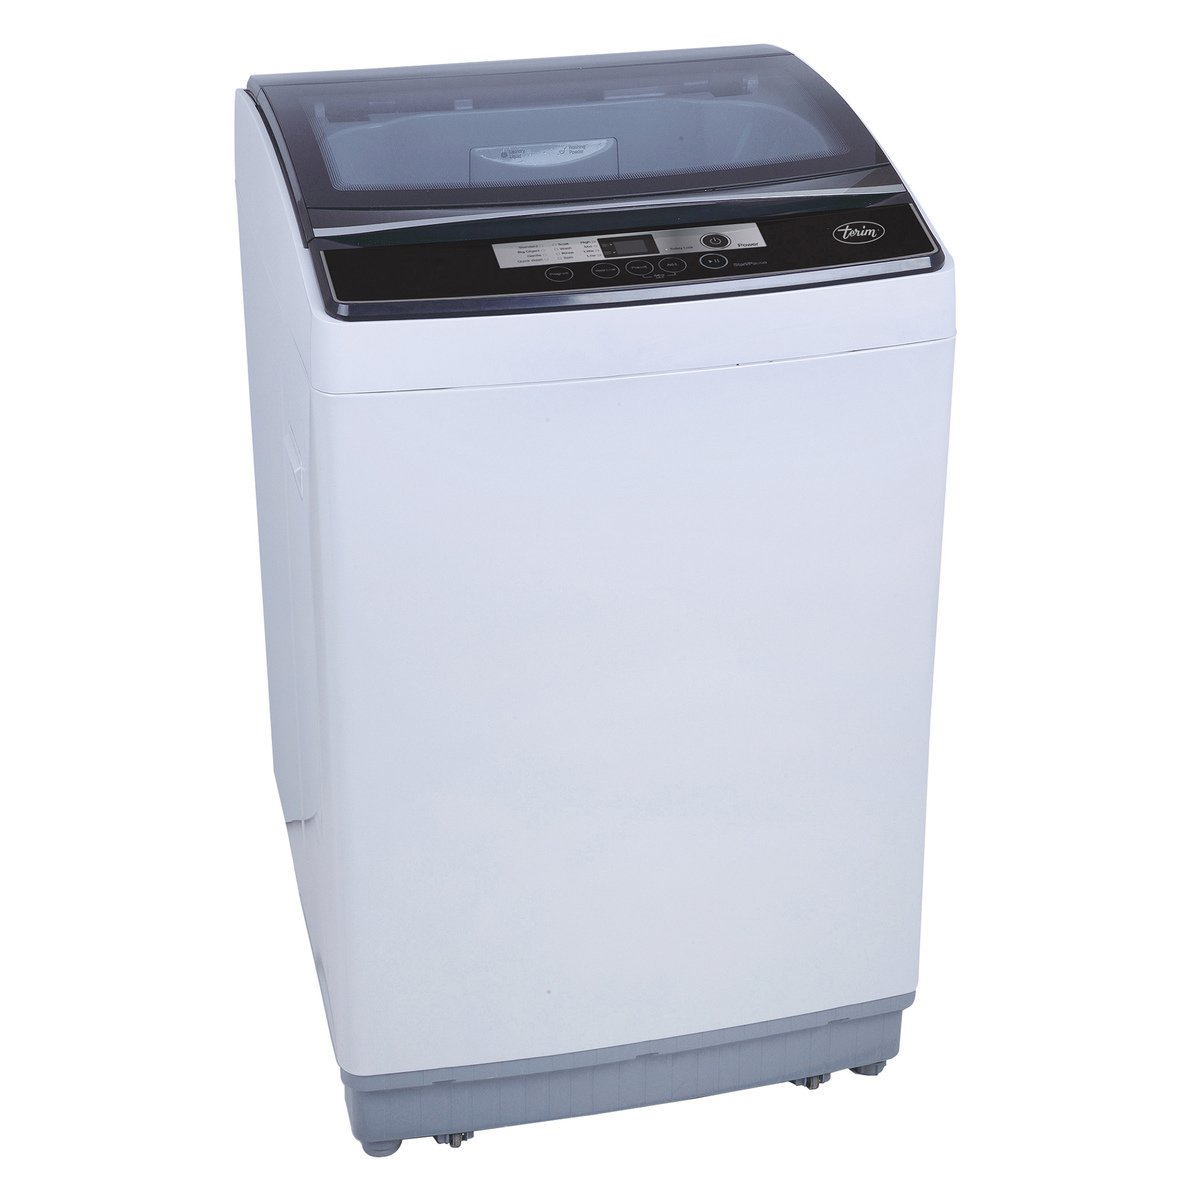 Terim Top Load Washing Machine TERTL800  8KG